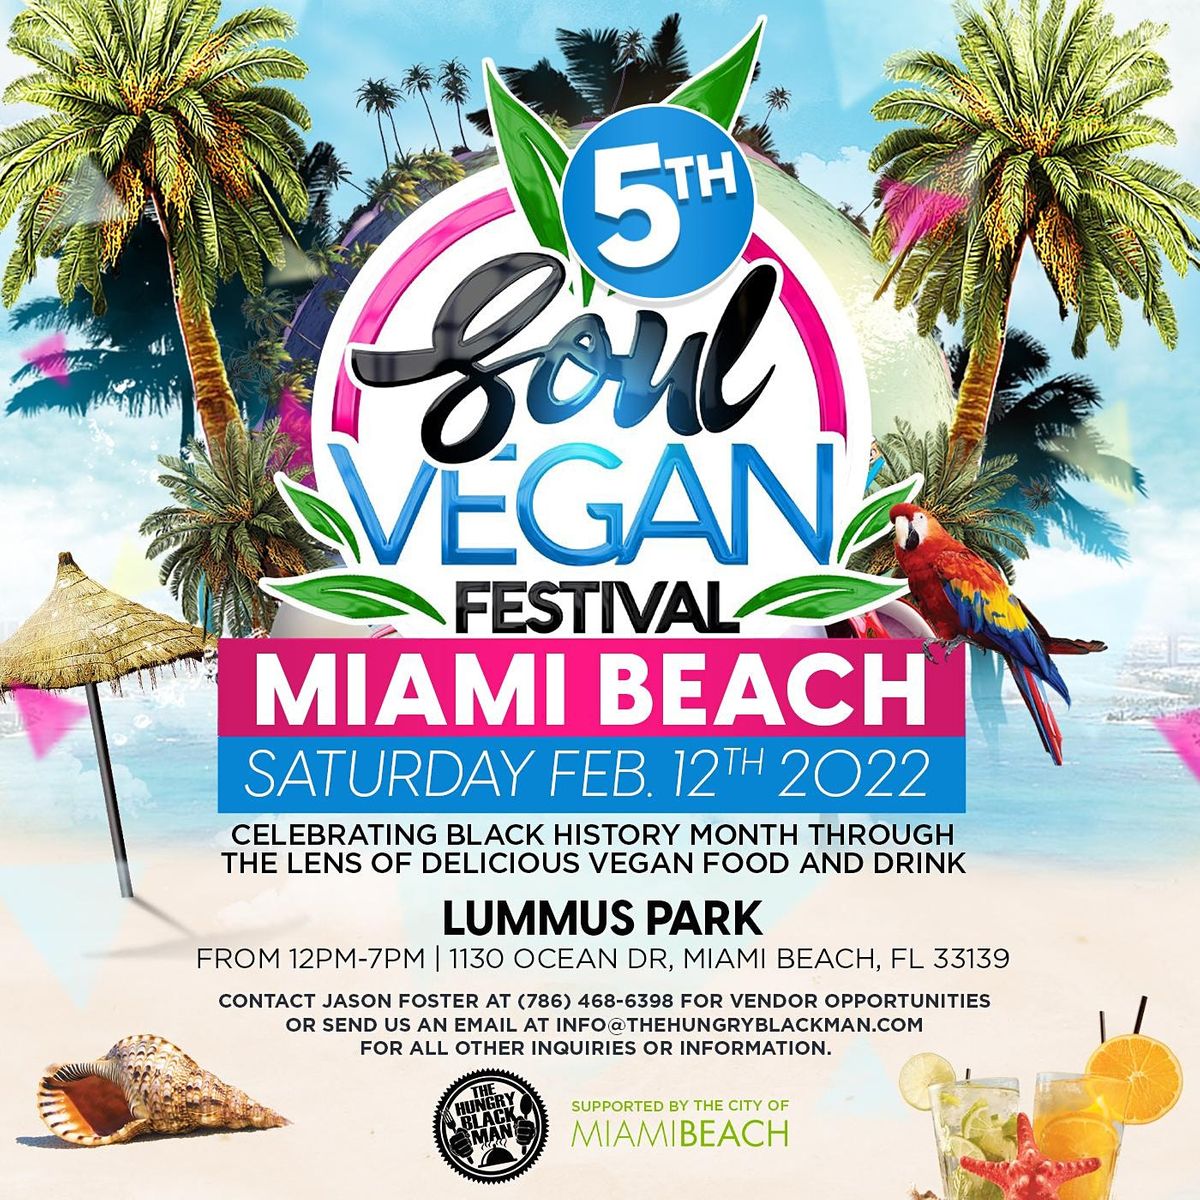 5th Annual Soul Vegan Festival 2022, Lummus Park, Miami Beach, 12